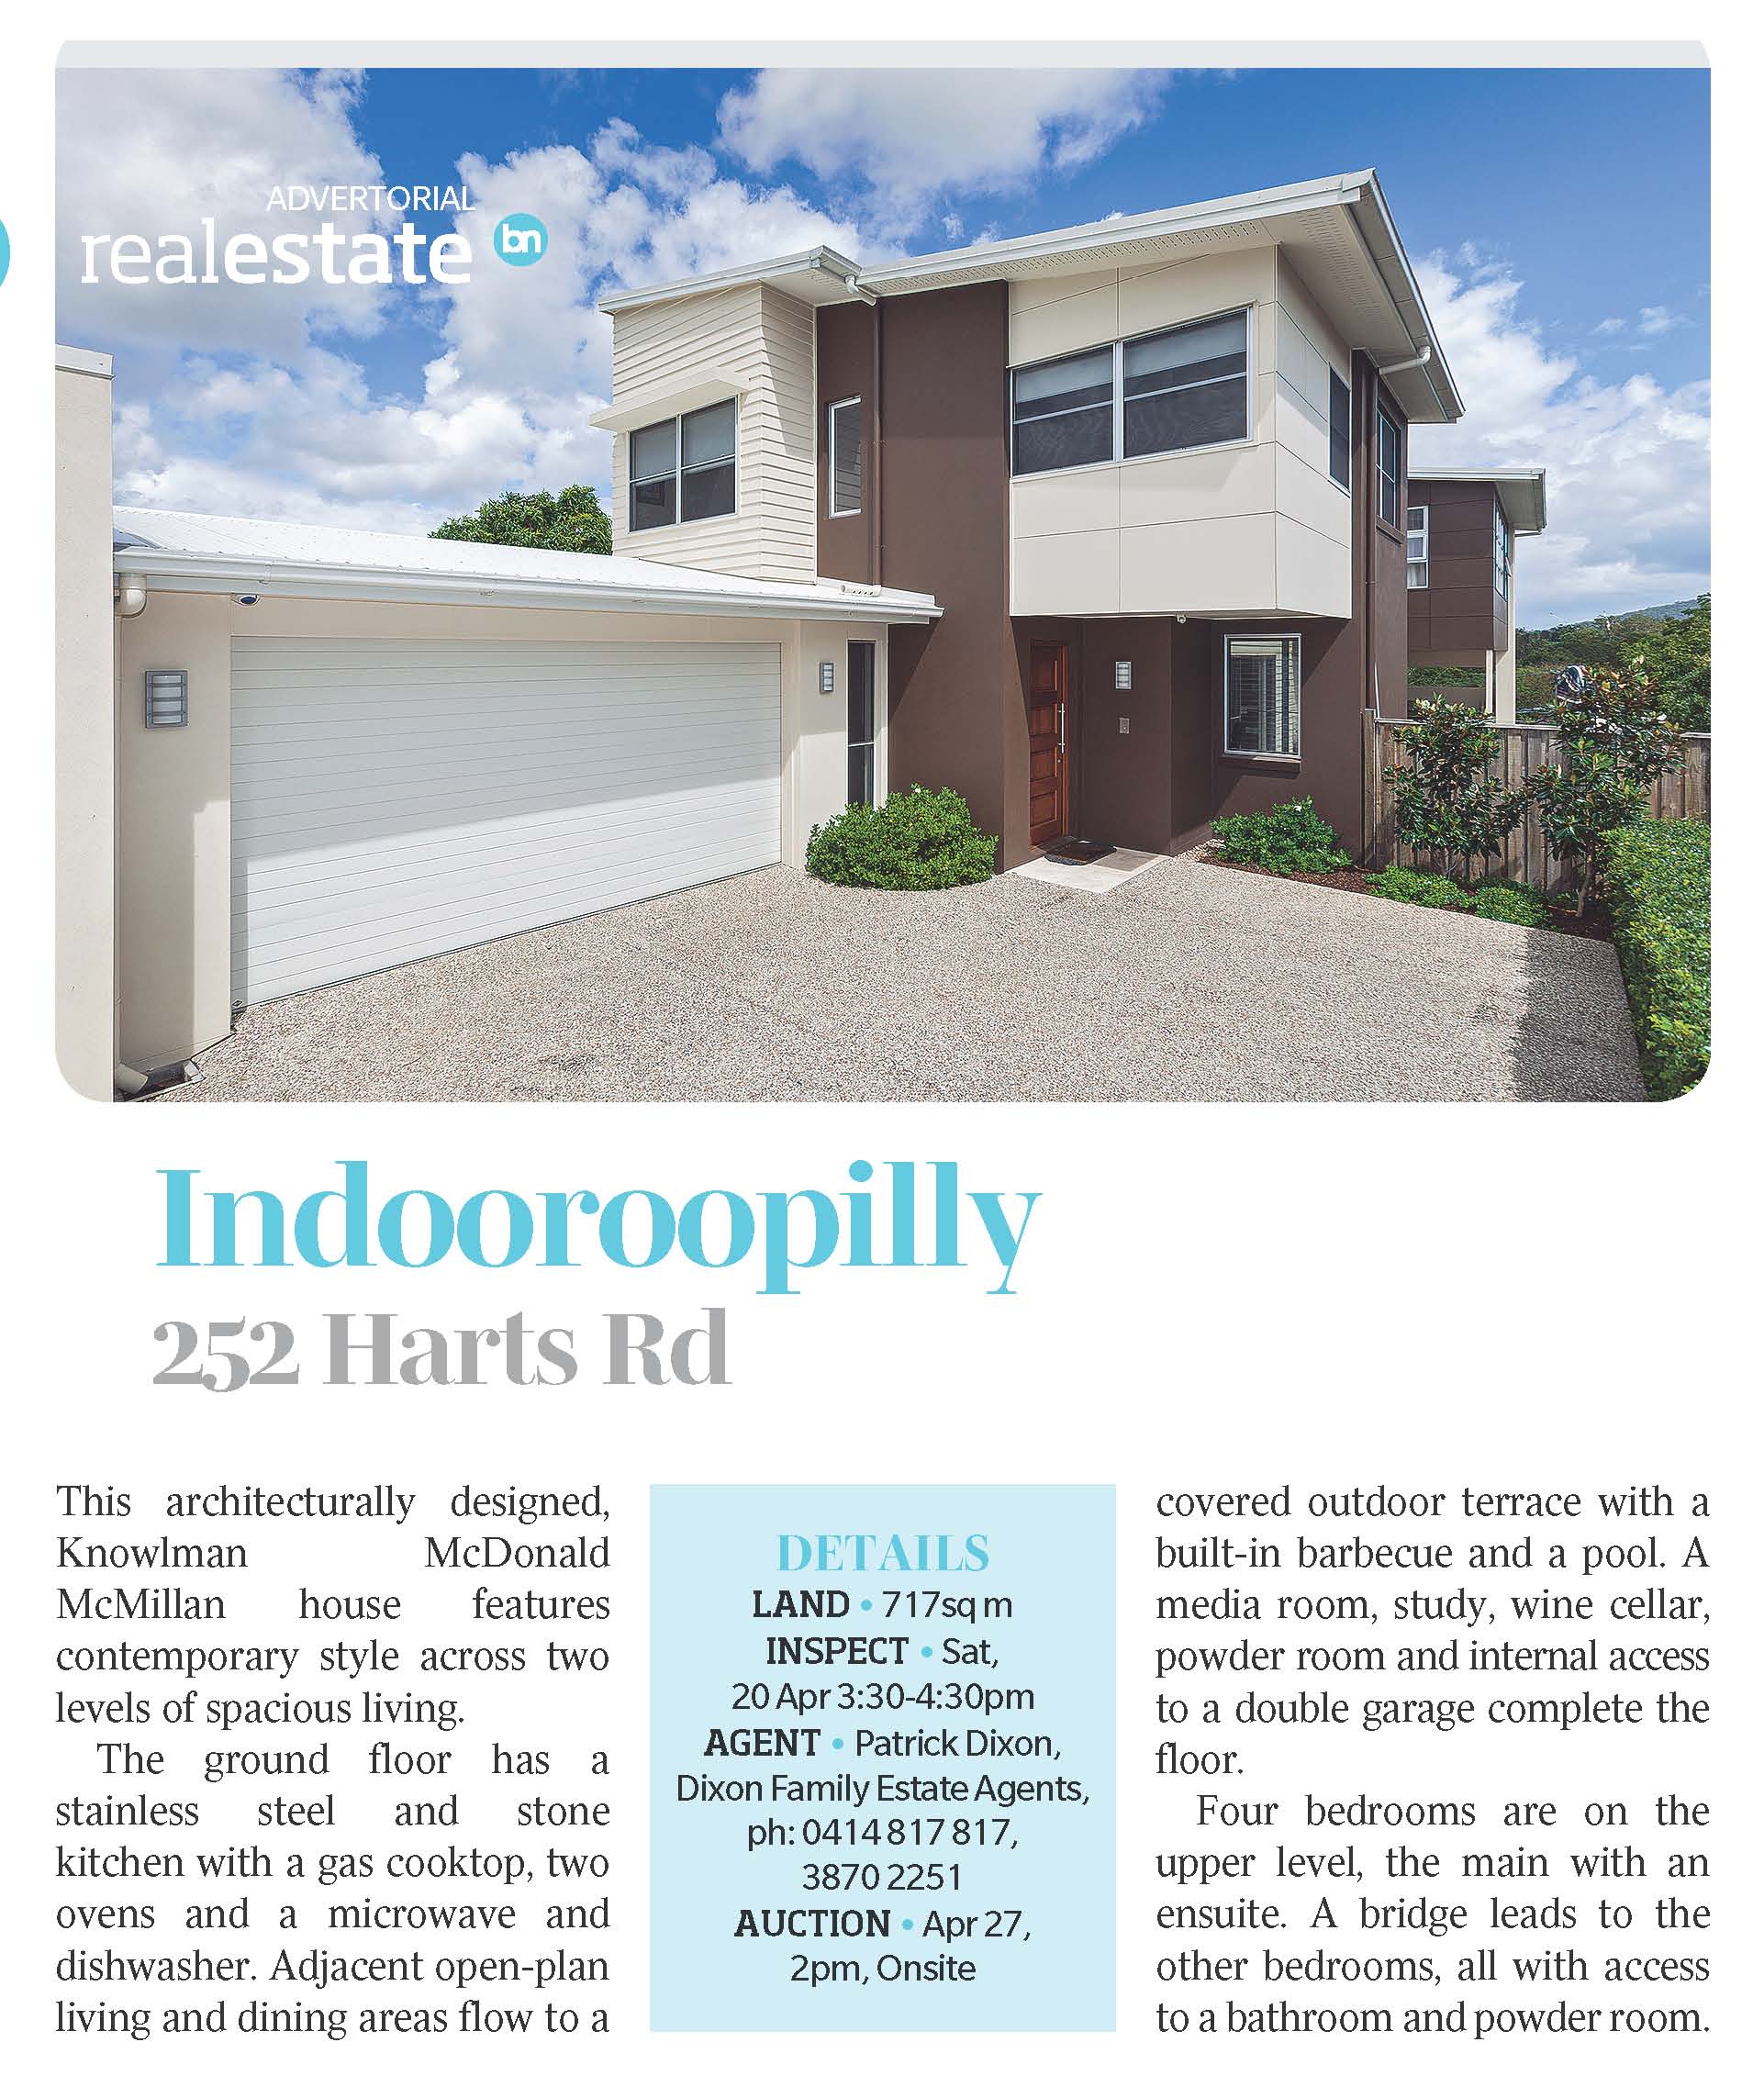 252 Harts Road, Indooroopilly (Brisbane News)